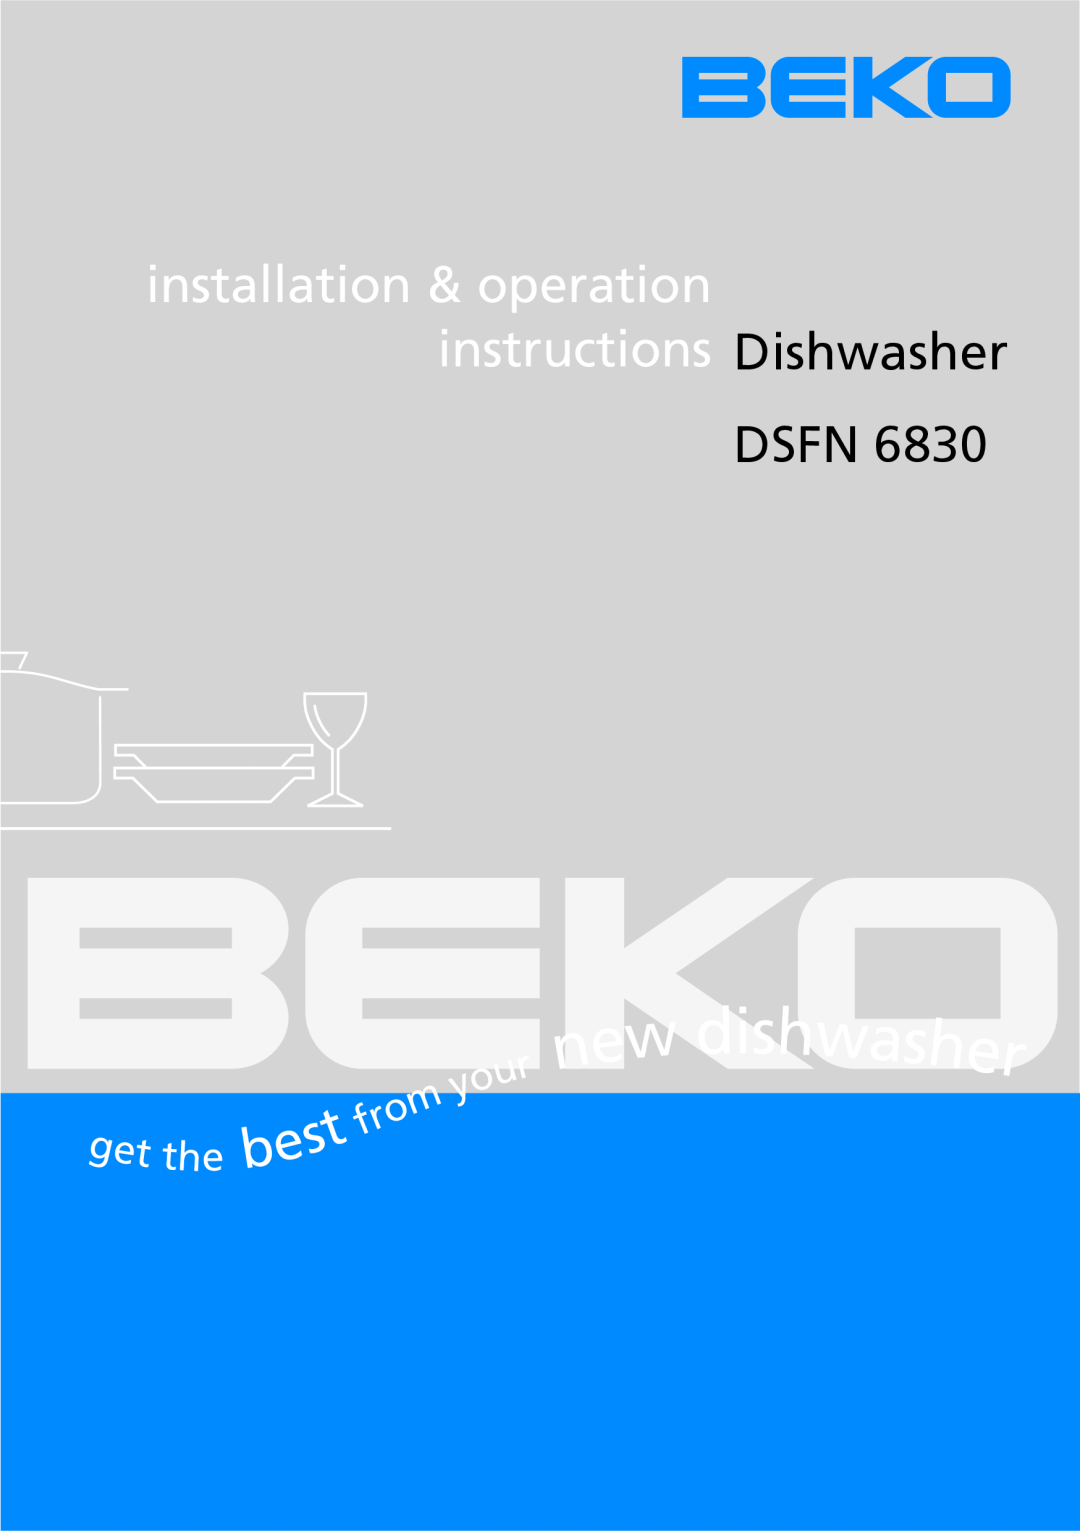 Beko DSFN 6830 manual Dishwasher, Dsfn 